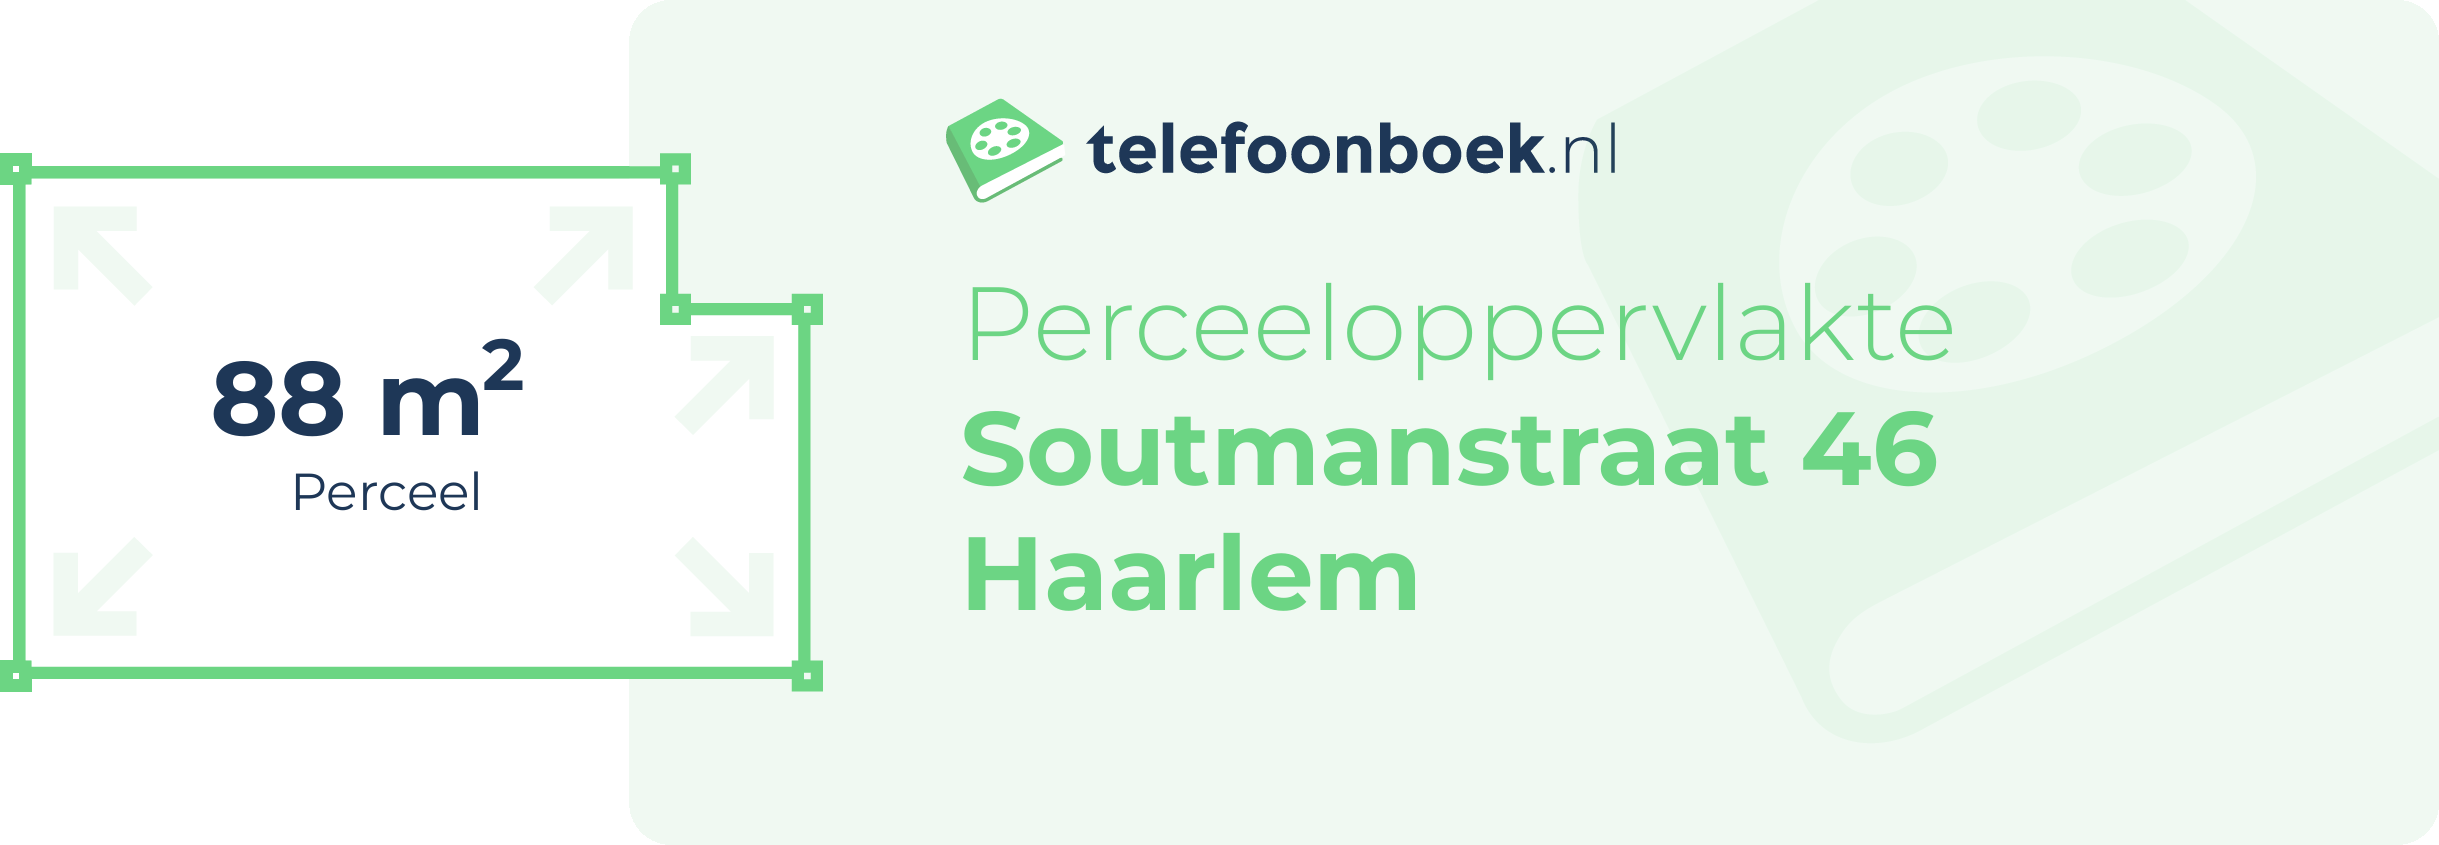 Perceeloppervlakte Soutmanstraat 46 Haarlem